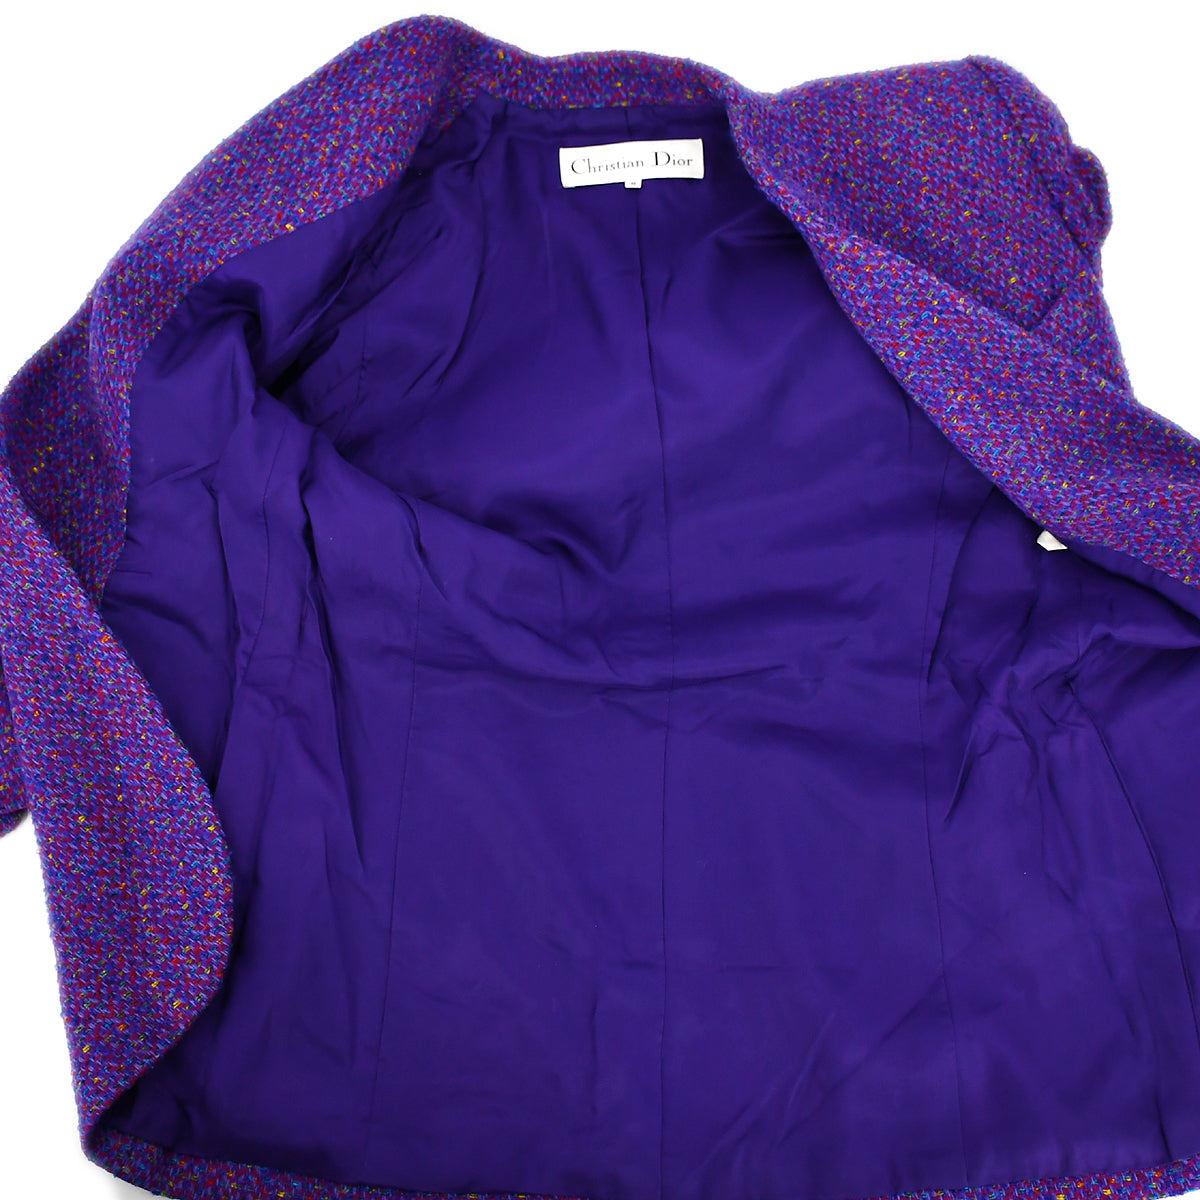 Christian Dior Collarless Jacket Purple 